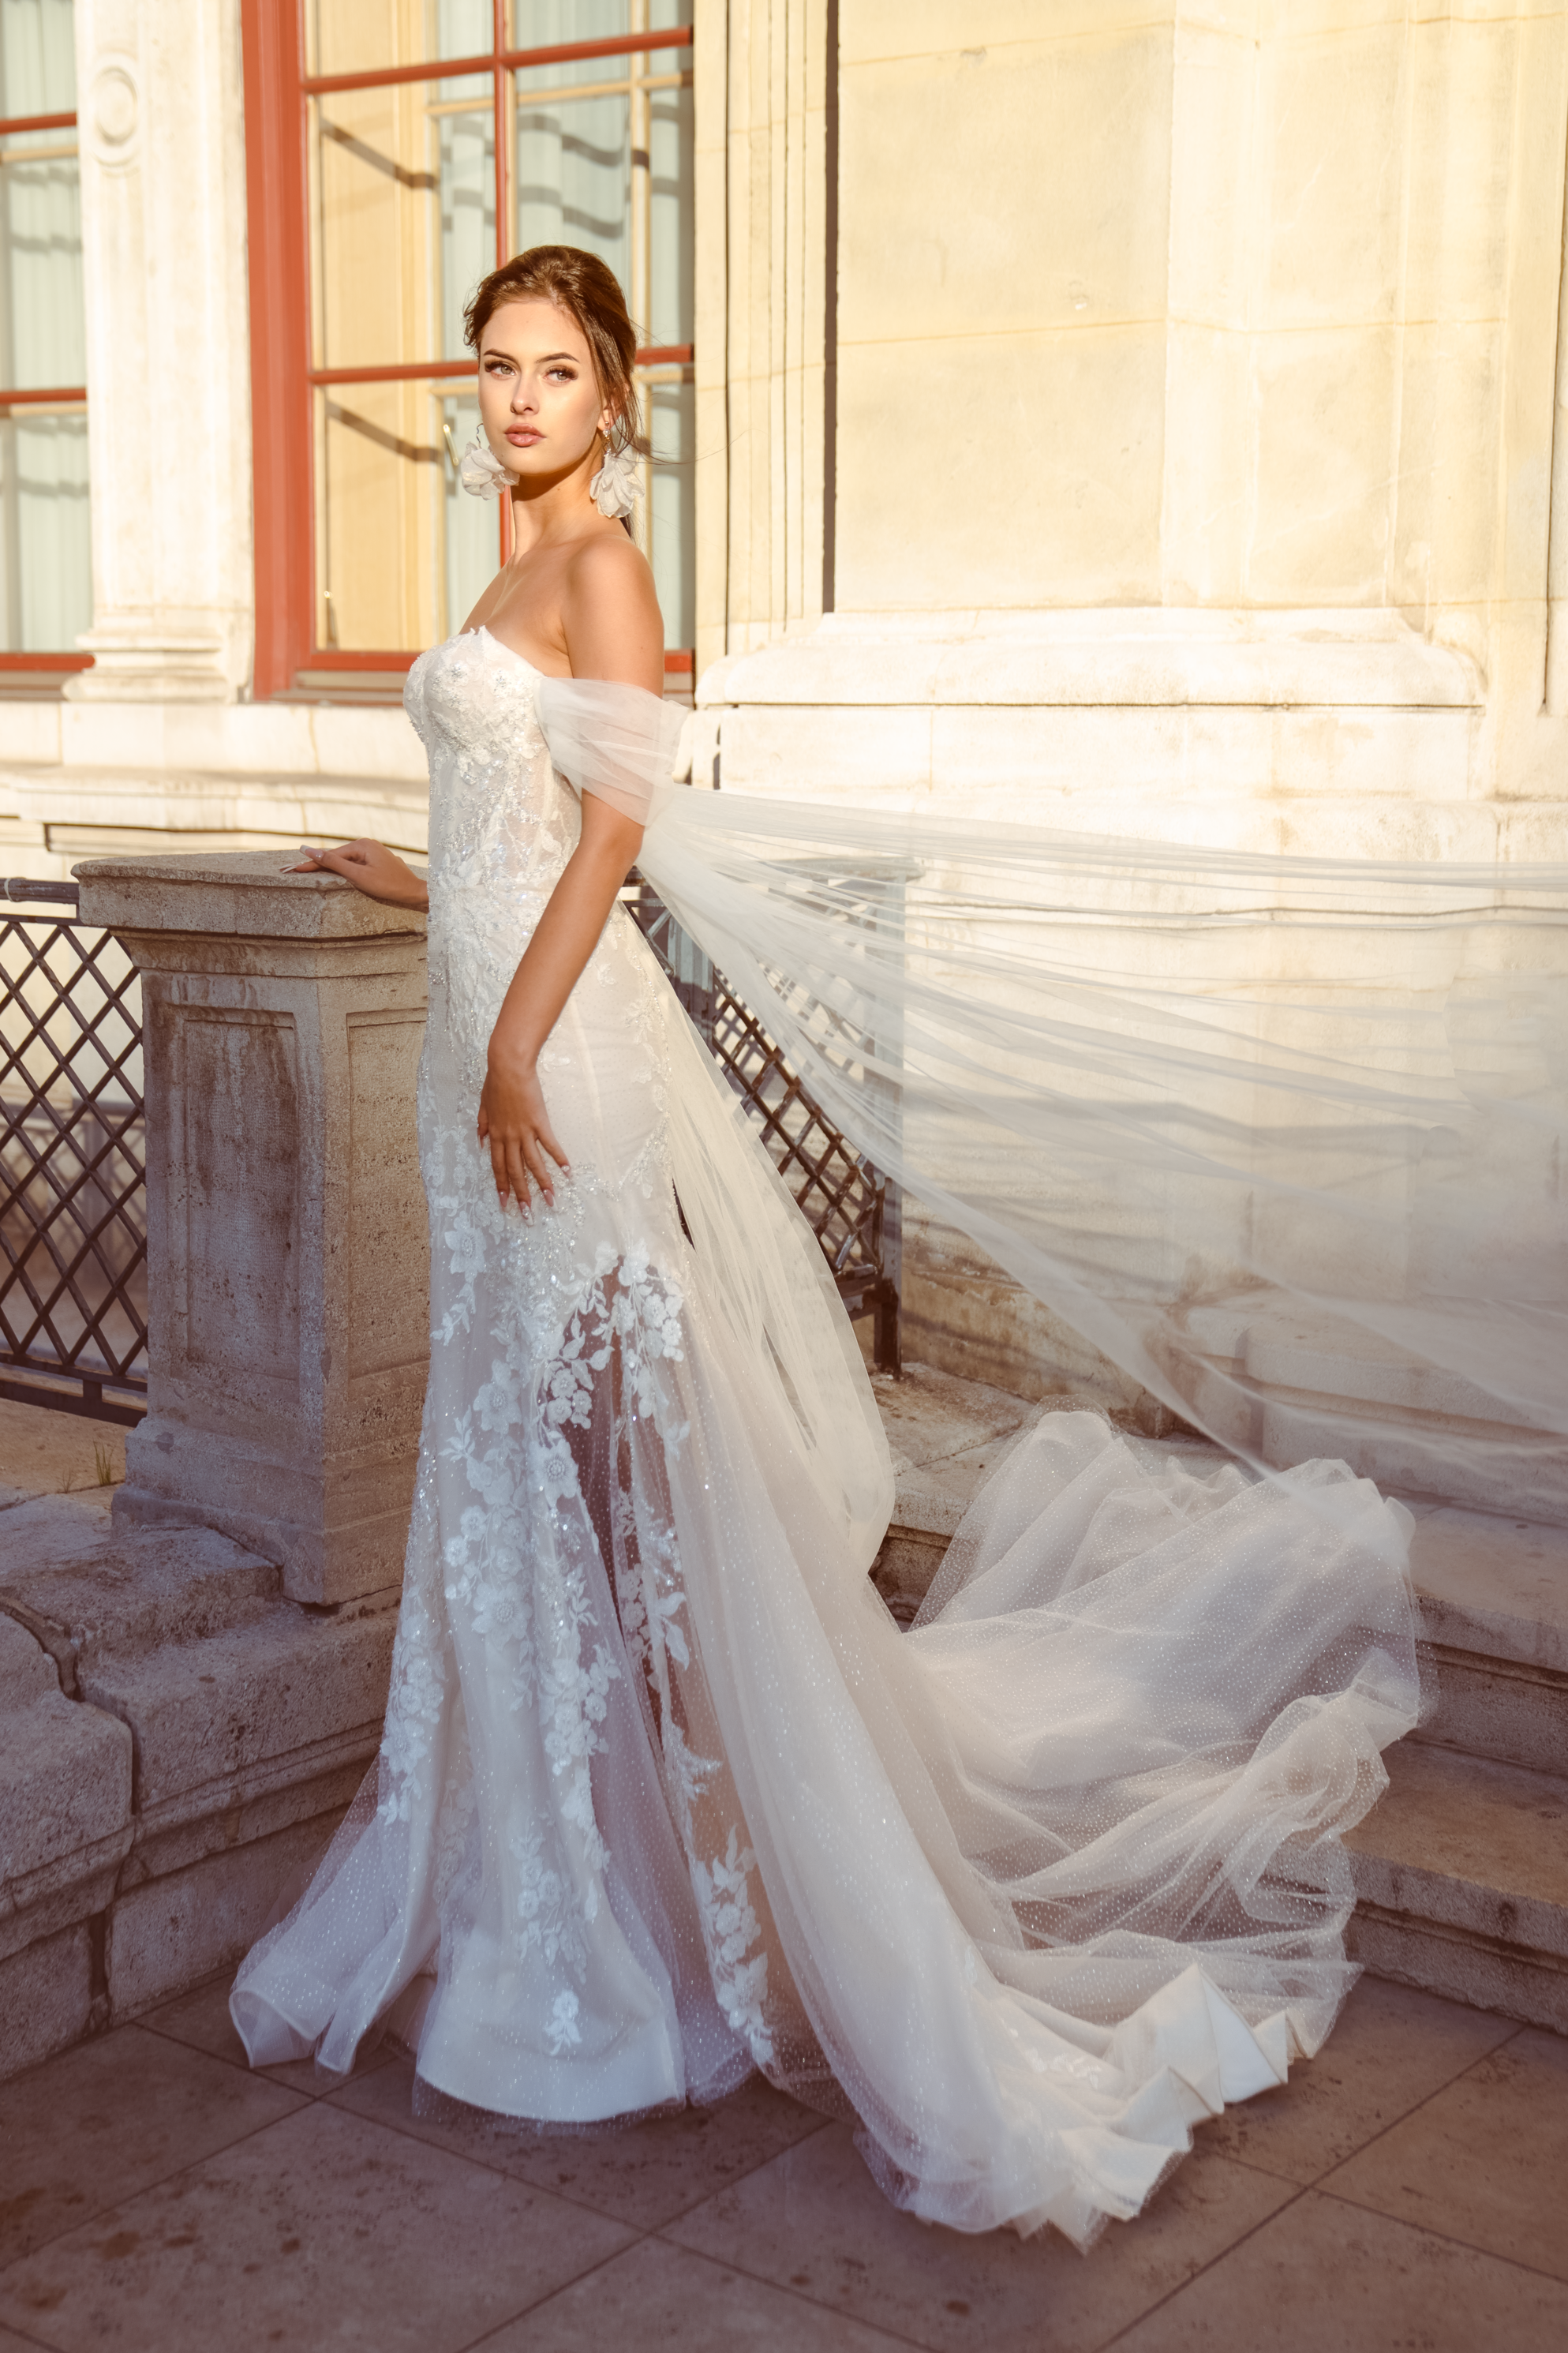 Olivia - Strapless Mermaid Lace Wedding Dress with Detachable Sleeves - Maxima Bridal